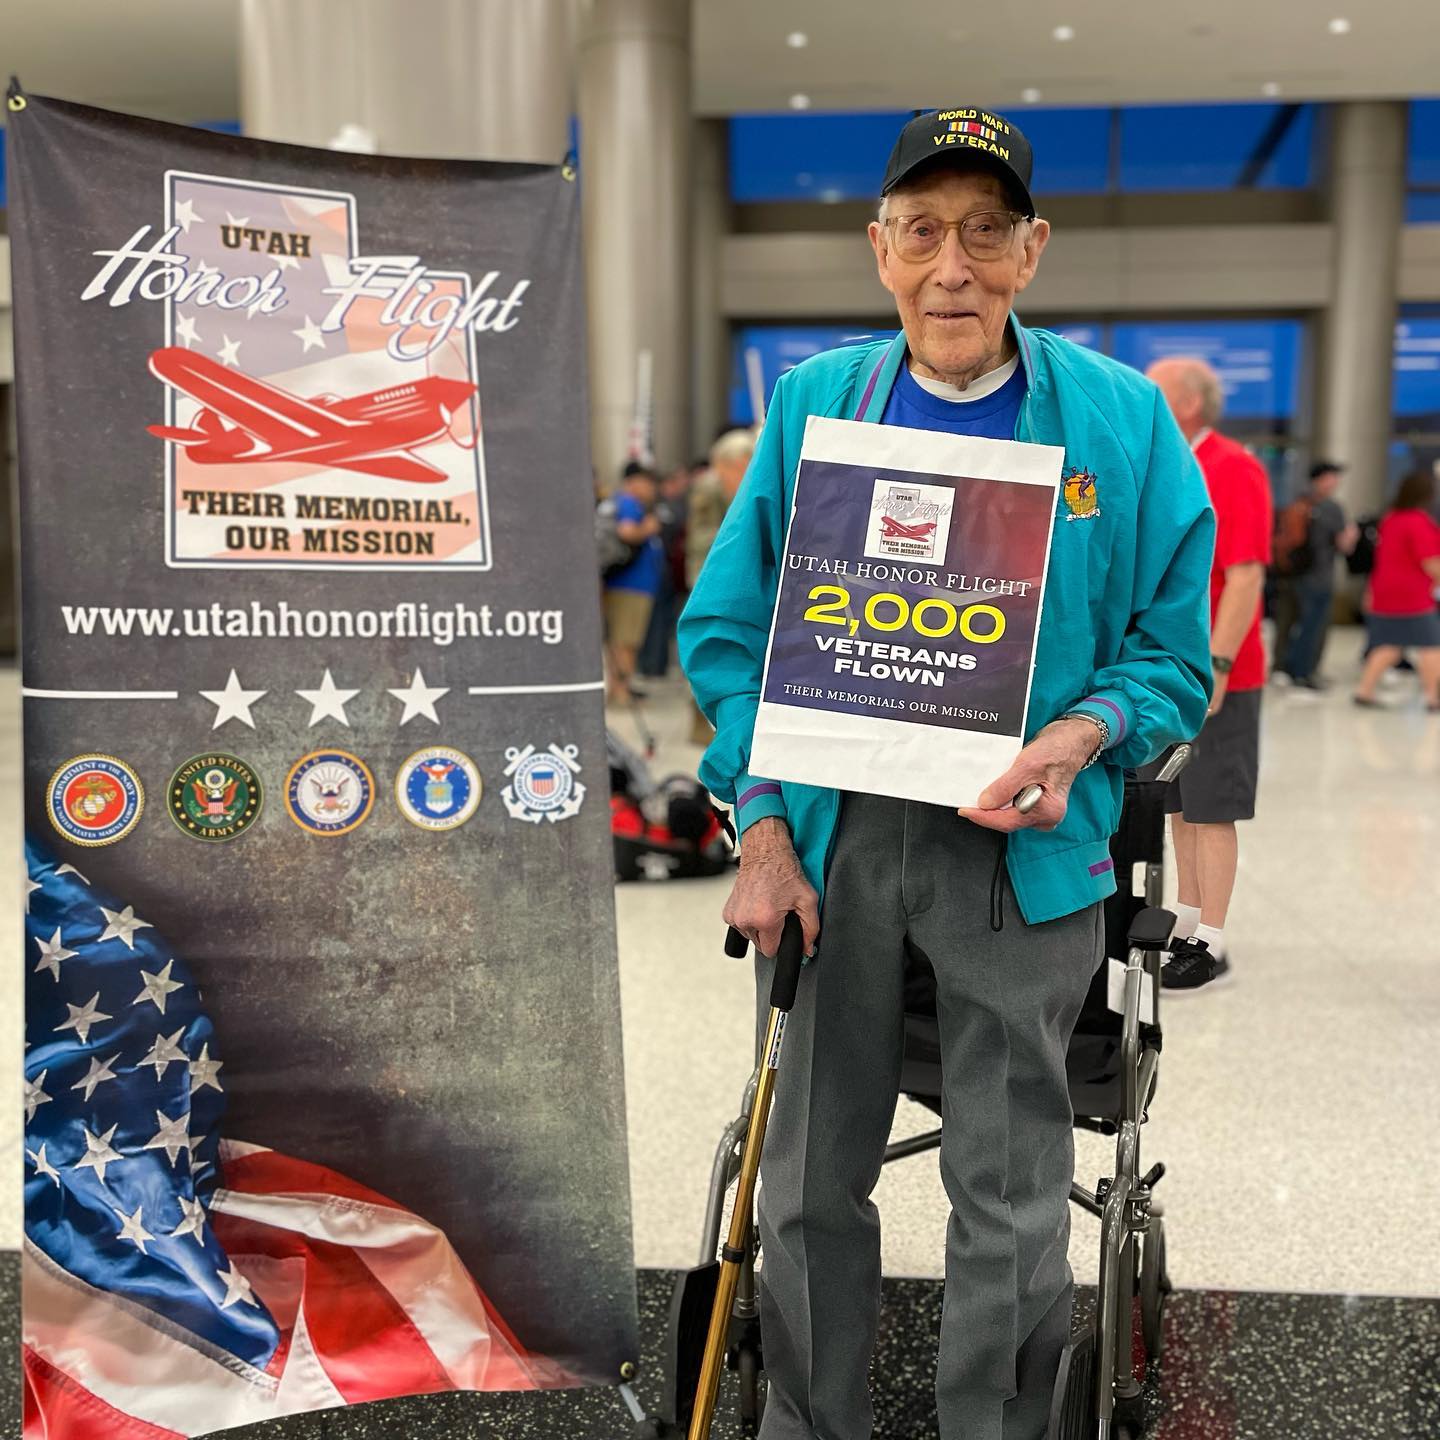 Over 2000 Veterans Flown with Utah Honor Flight